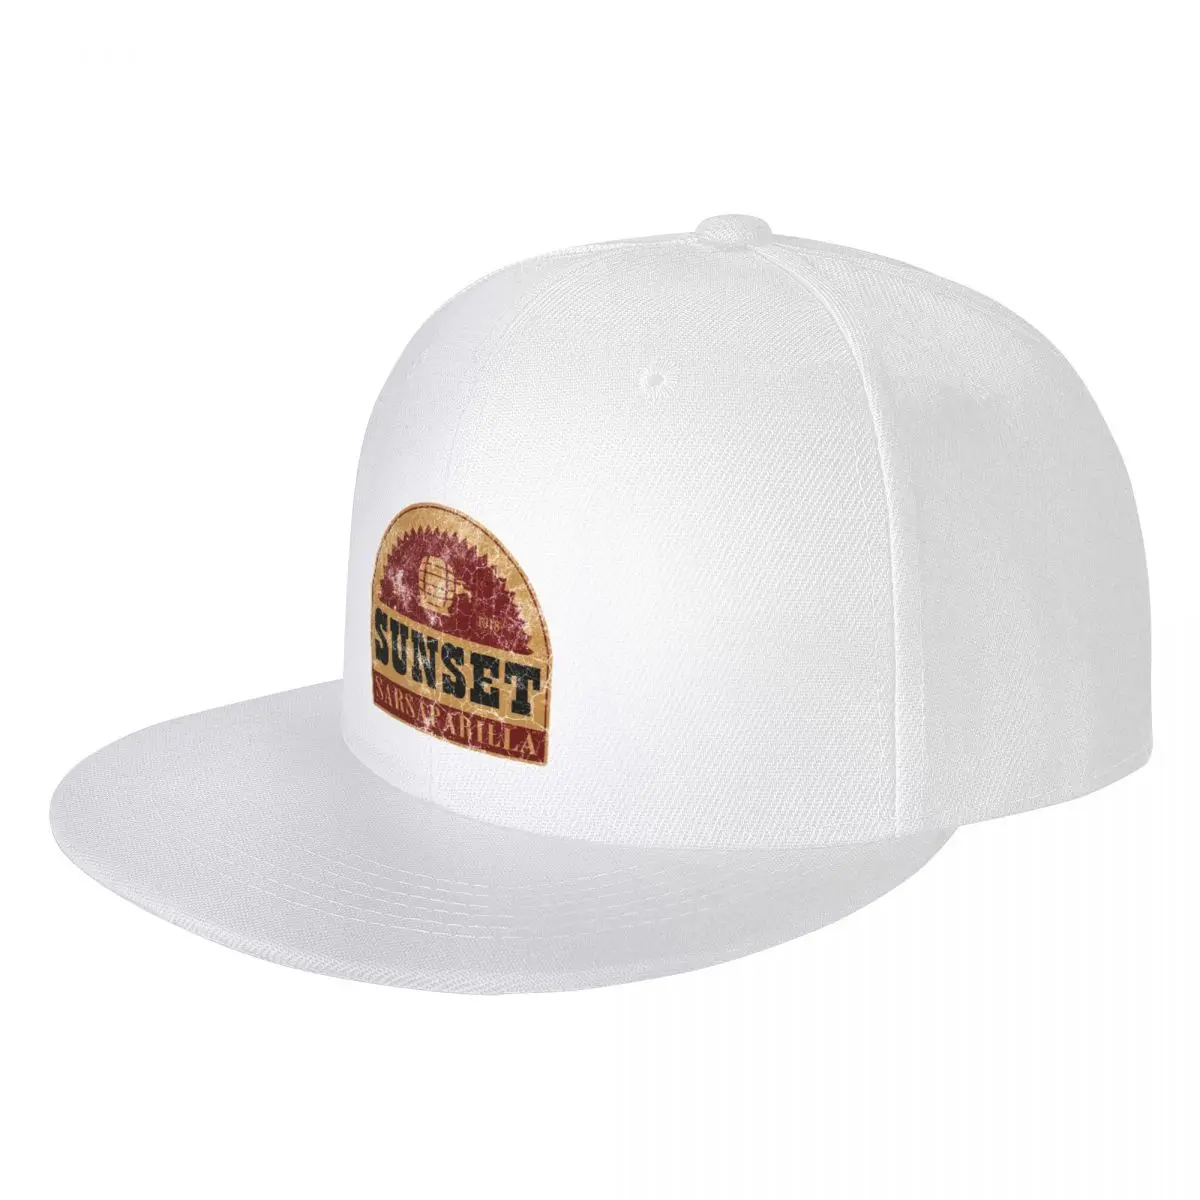 

Sunset Sarsaparilla distressed logo Hip Hop Hat Cap hat baseball cap for men Women's